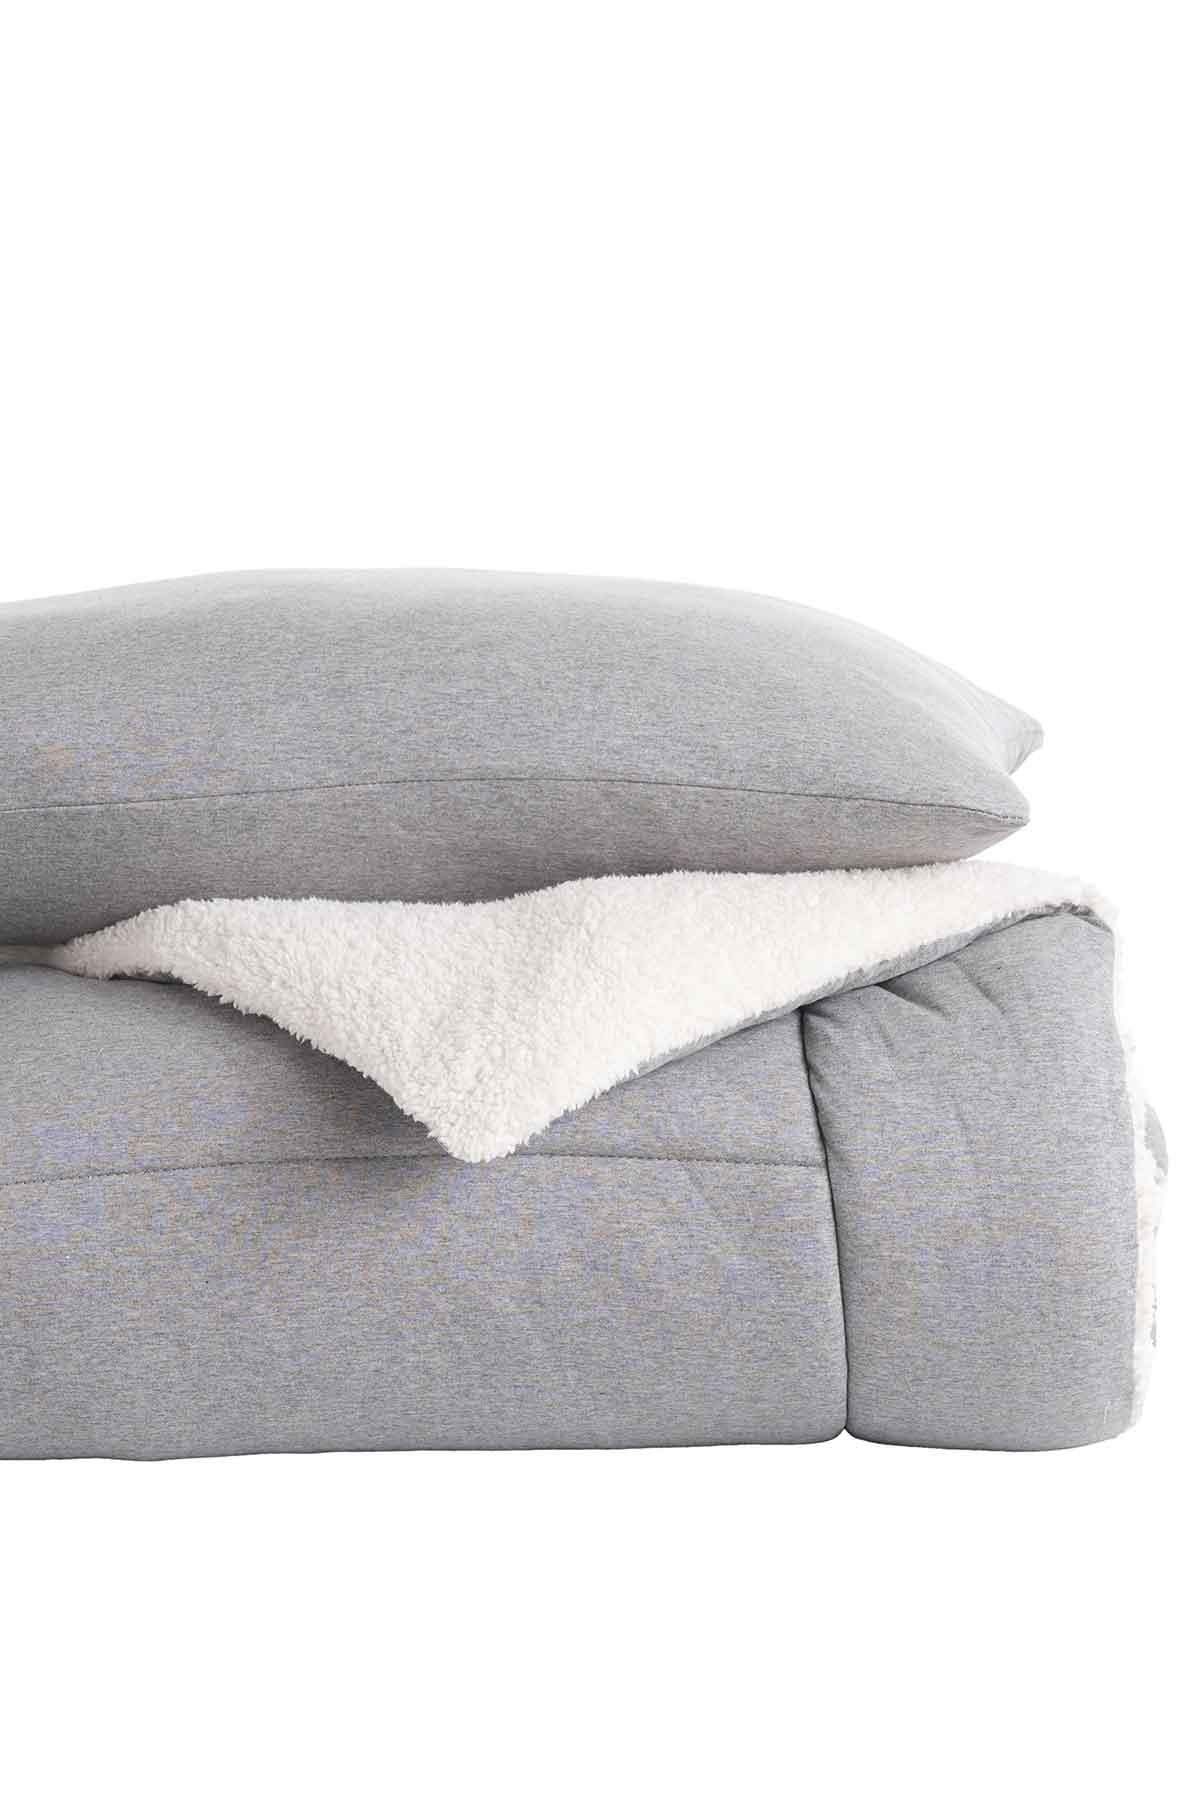 Gray Comfort Set Modern Uyku Seti Çift Kişilik - Elart Home